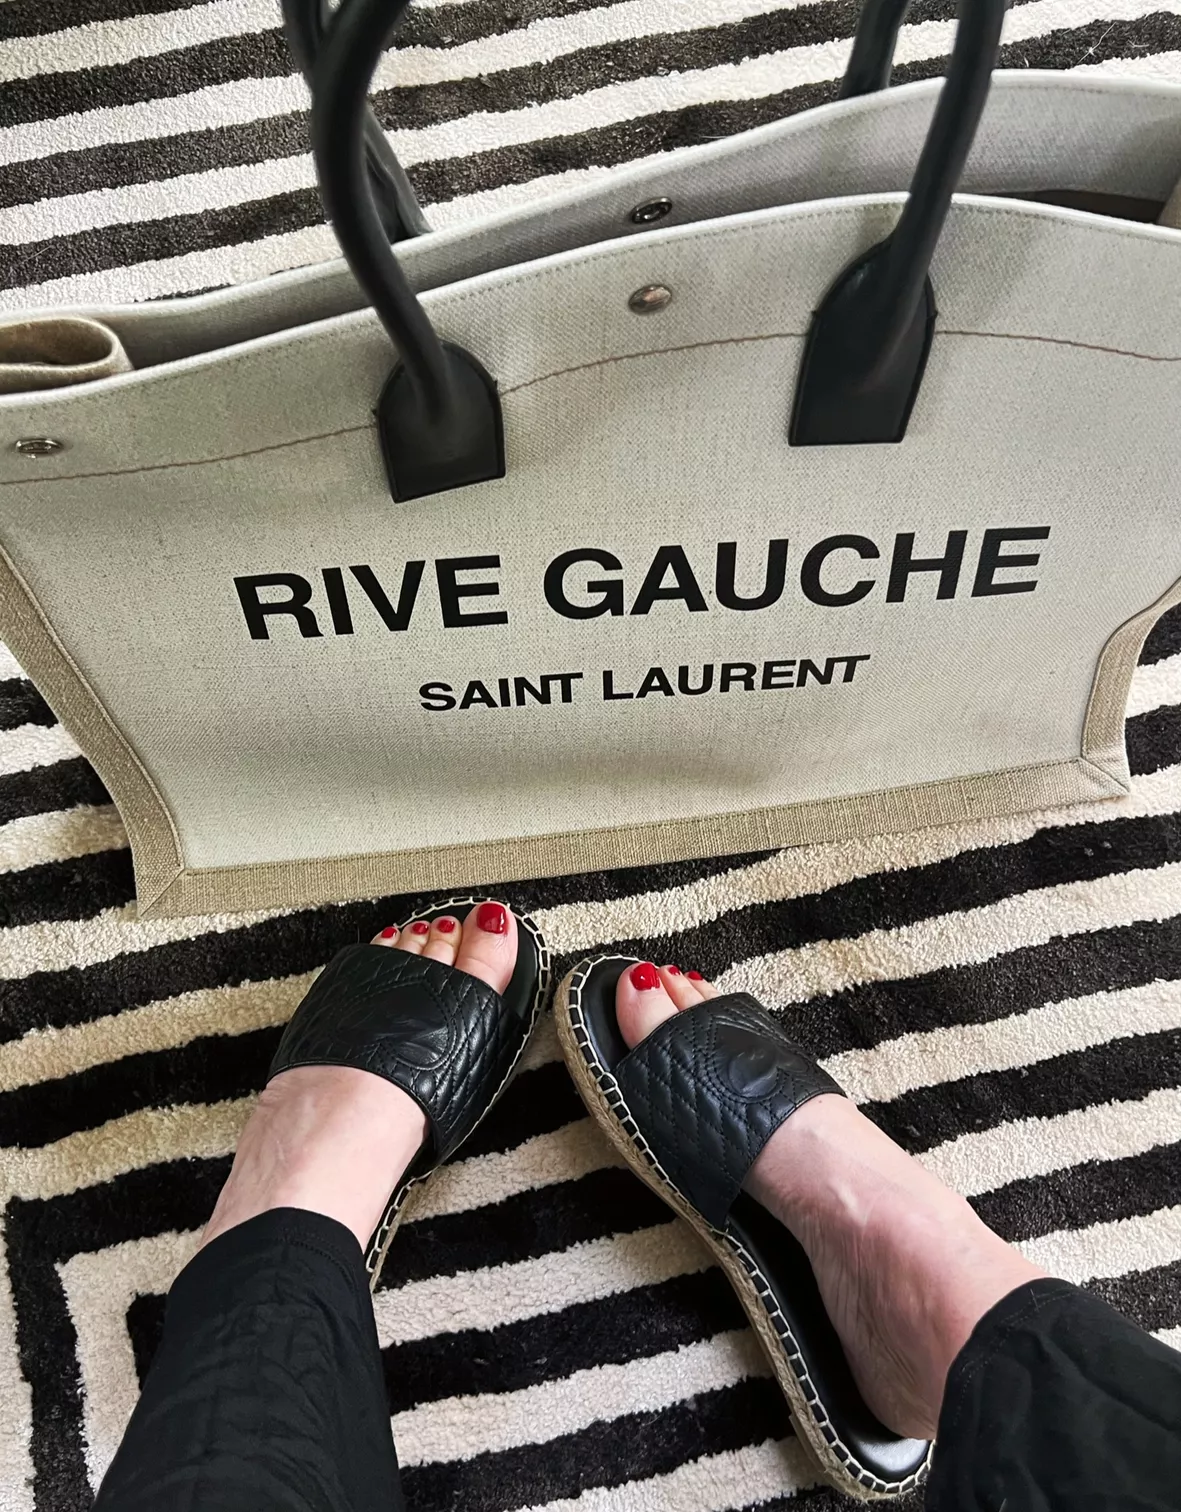 Rive Gauche Leather Tote Bag in Black - Saint Laurent